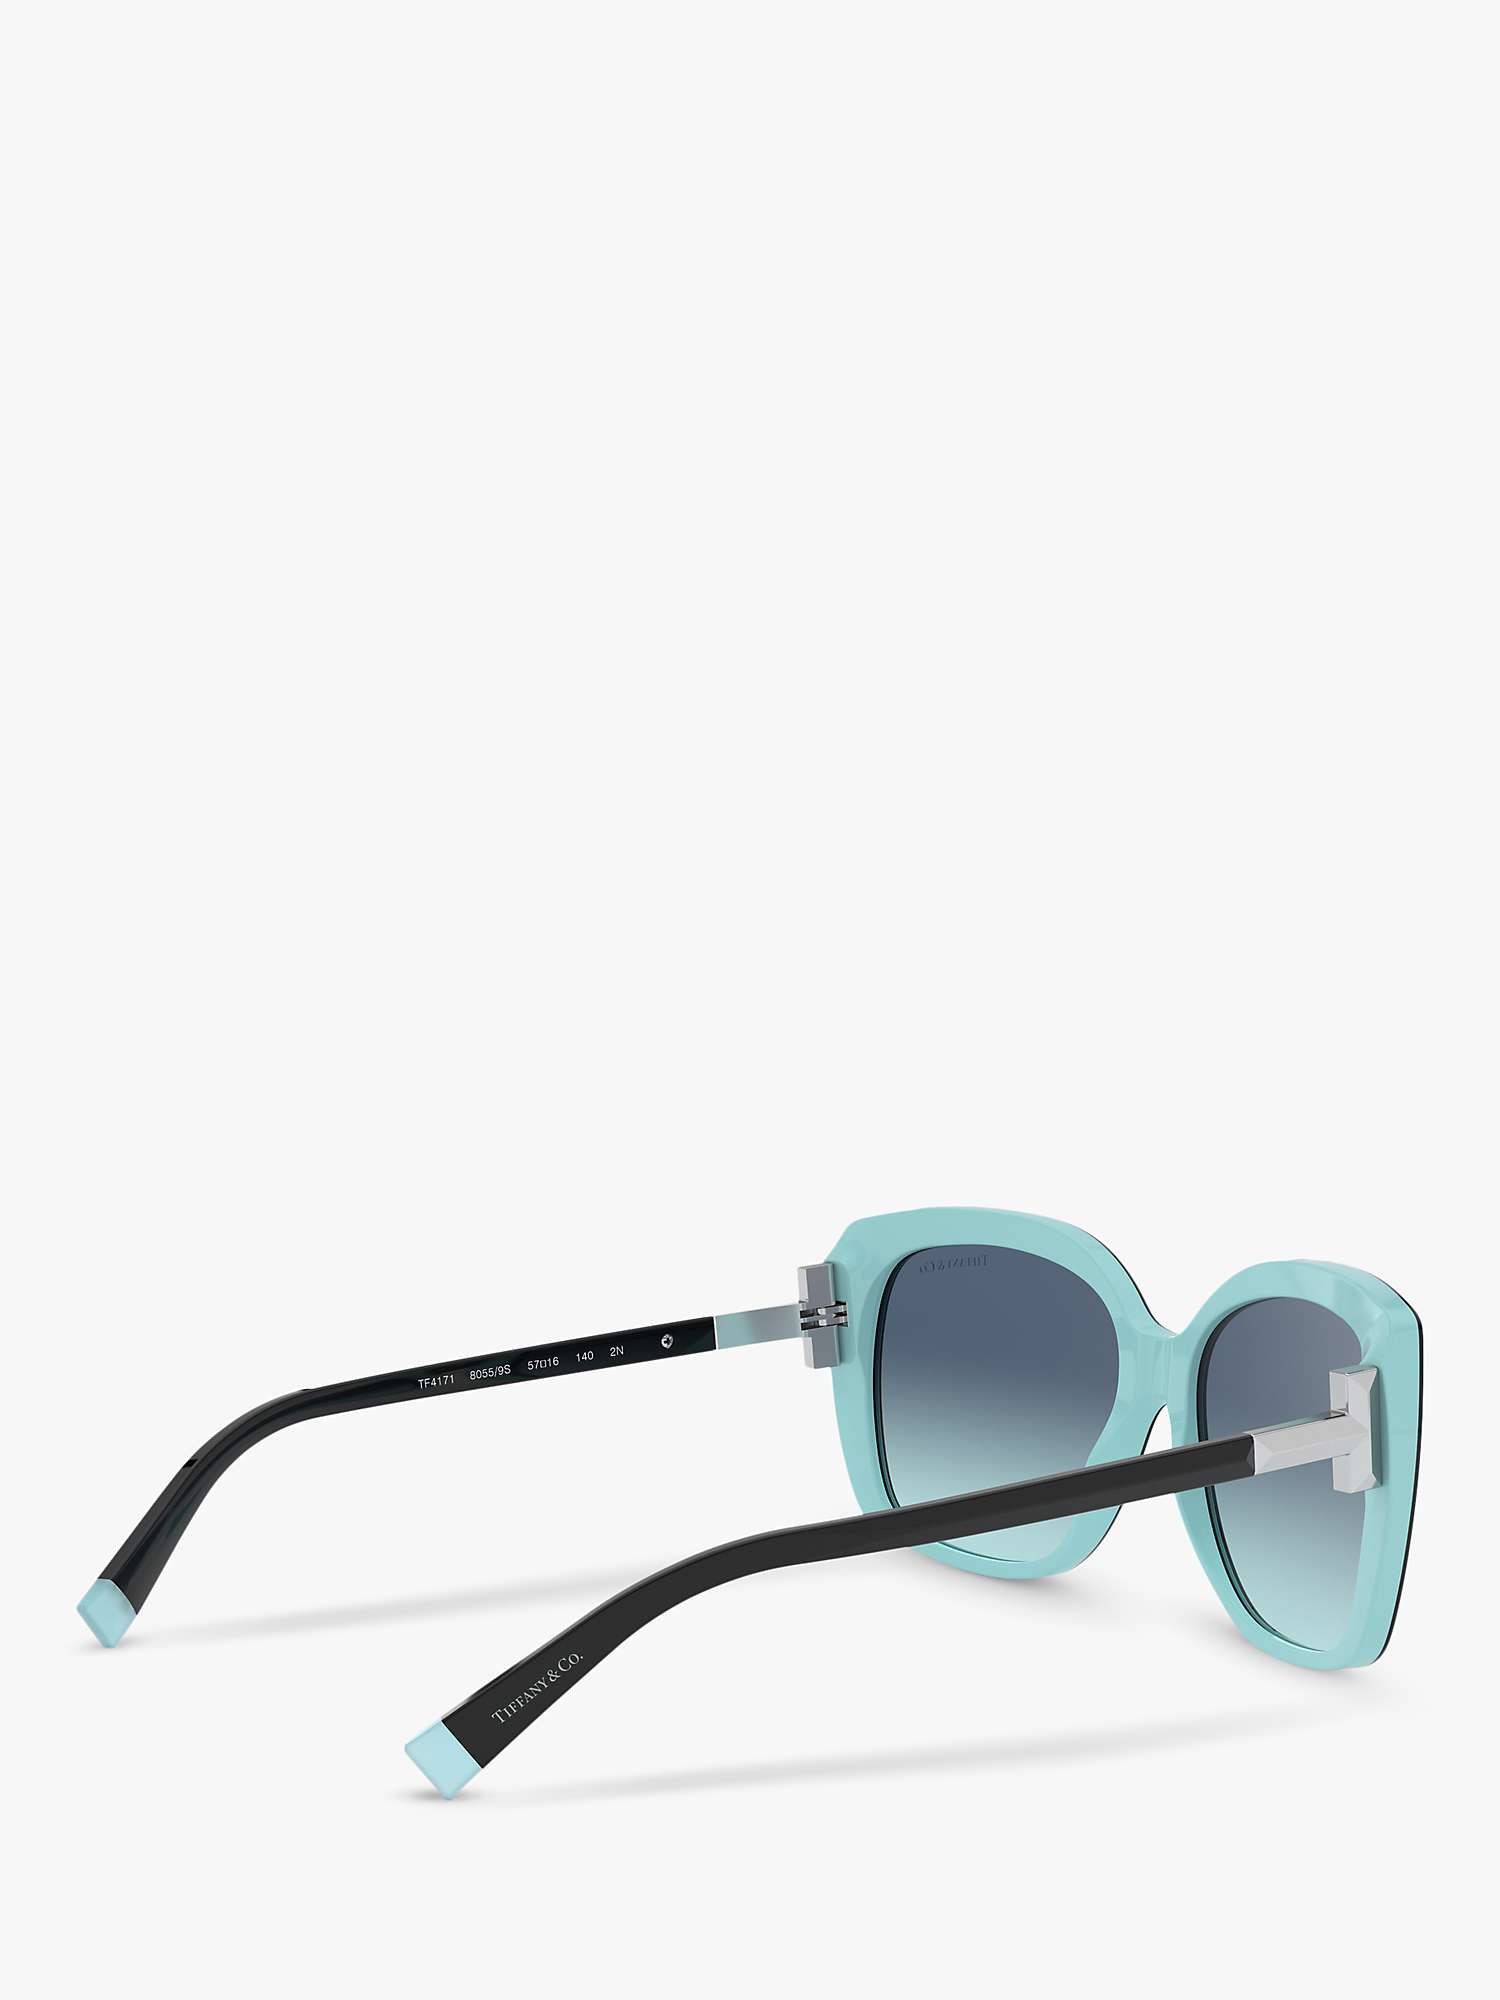 Buy Tiffany & Co TF4171 Women's Square Sunglasses, Aqua Blue Online at johnlewis.com